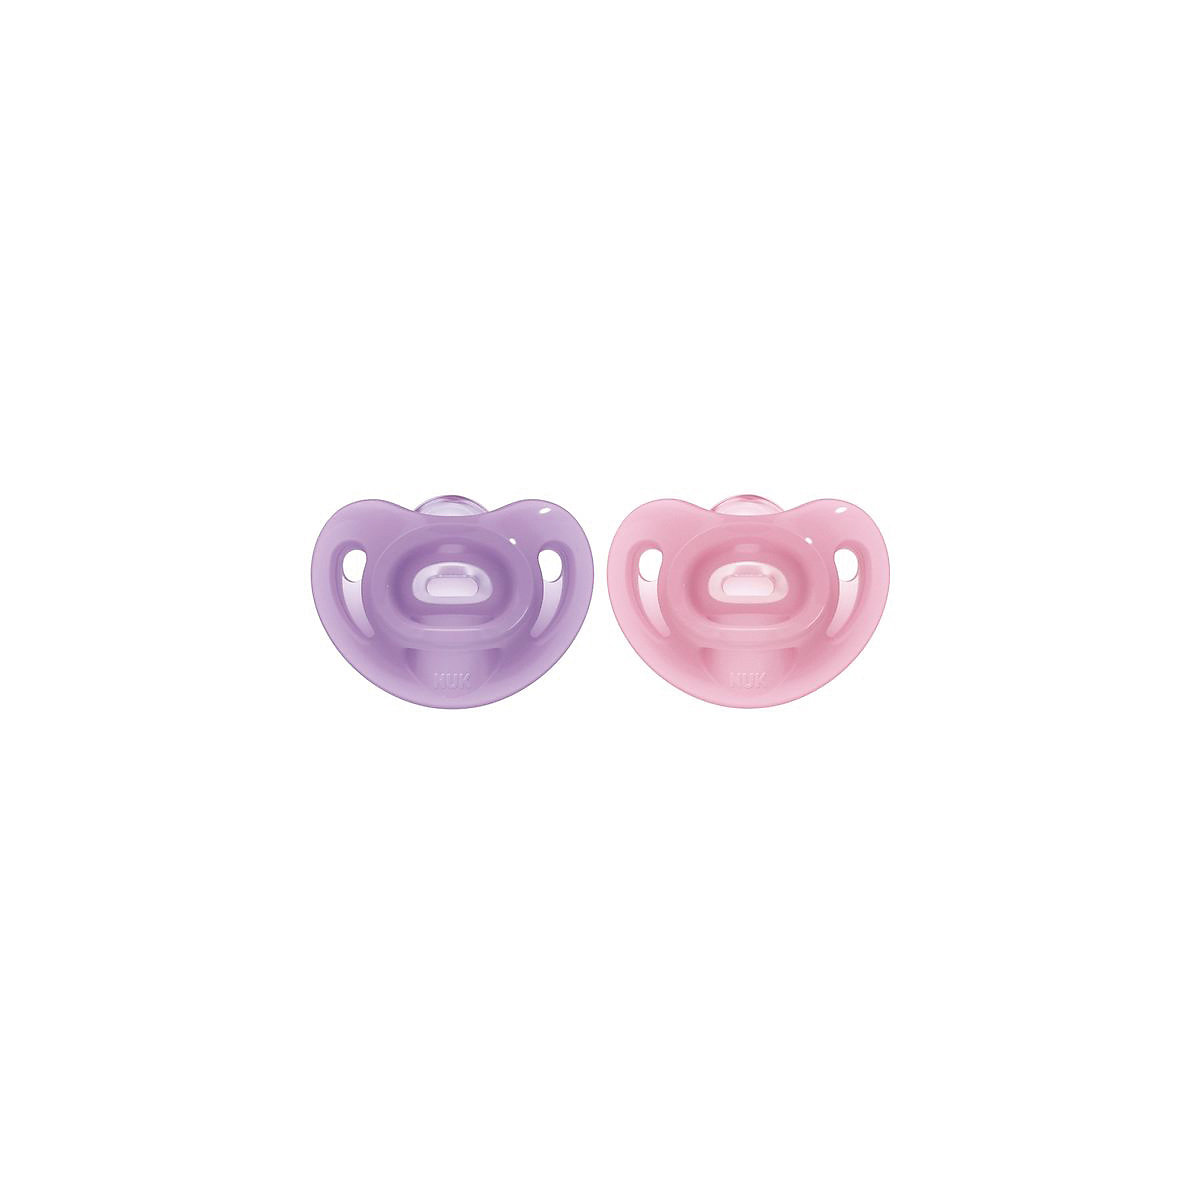 NUK Sensitive Schnuller aus 100% weichem Silikon kiefergerechte Form 0-6 Monate 2 Stück lila & rosa